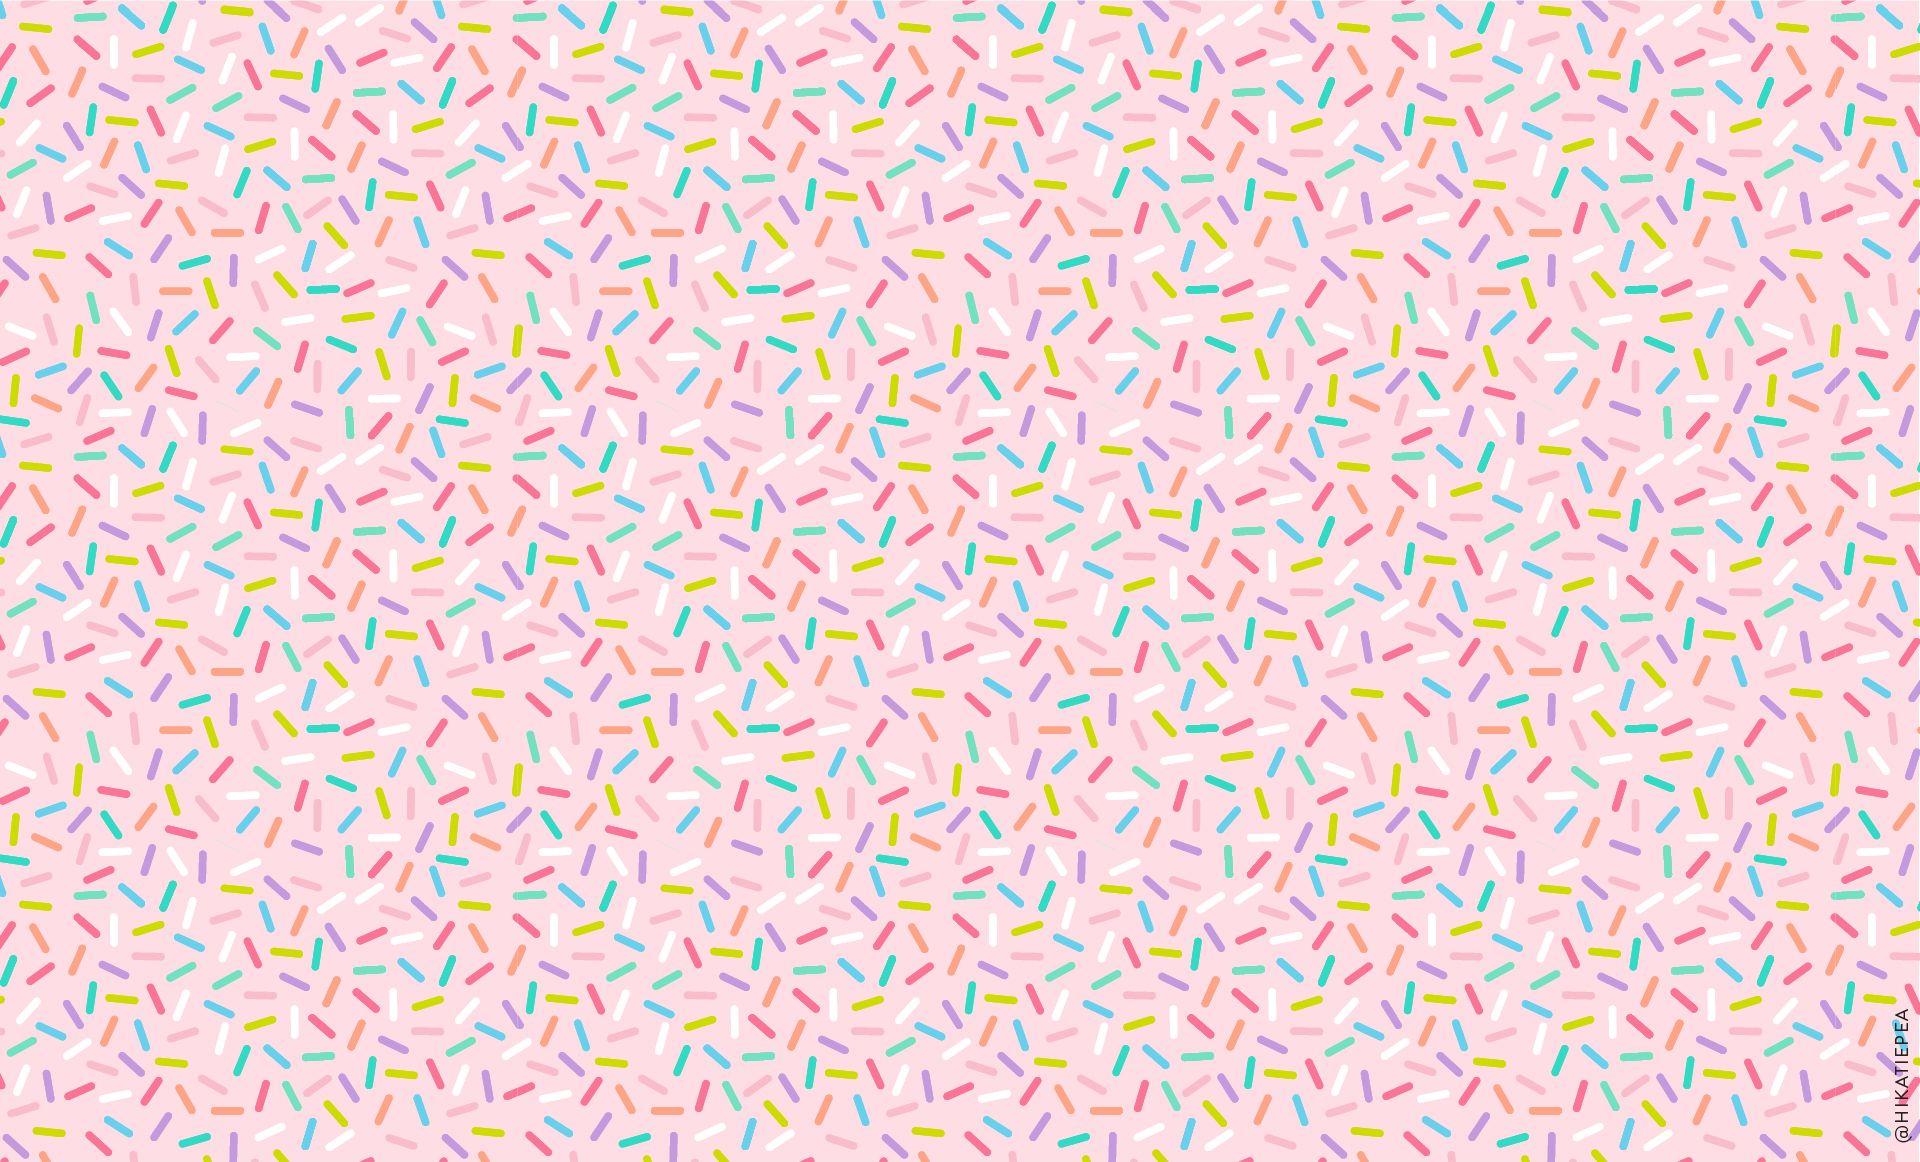 Sprinkles Wallpaper Images  Free Download on Freepik